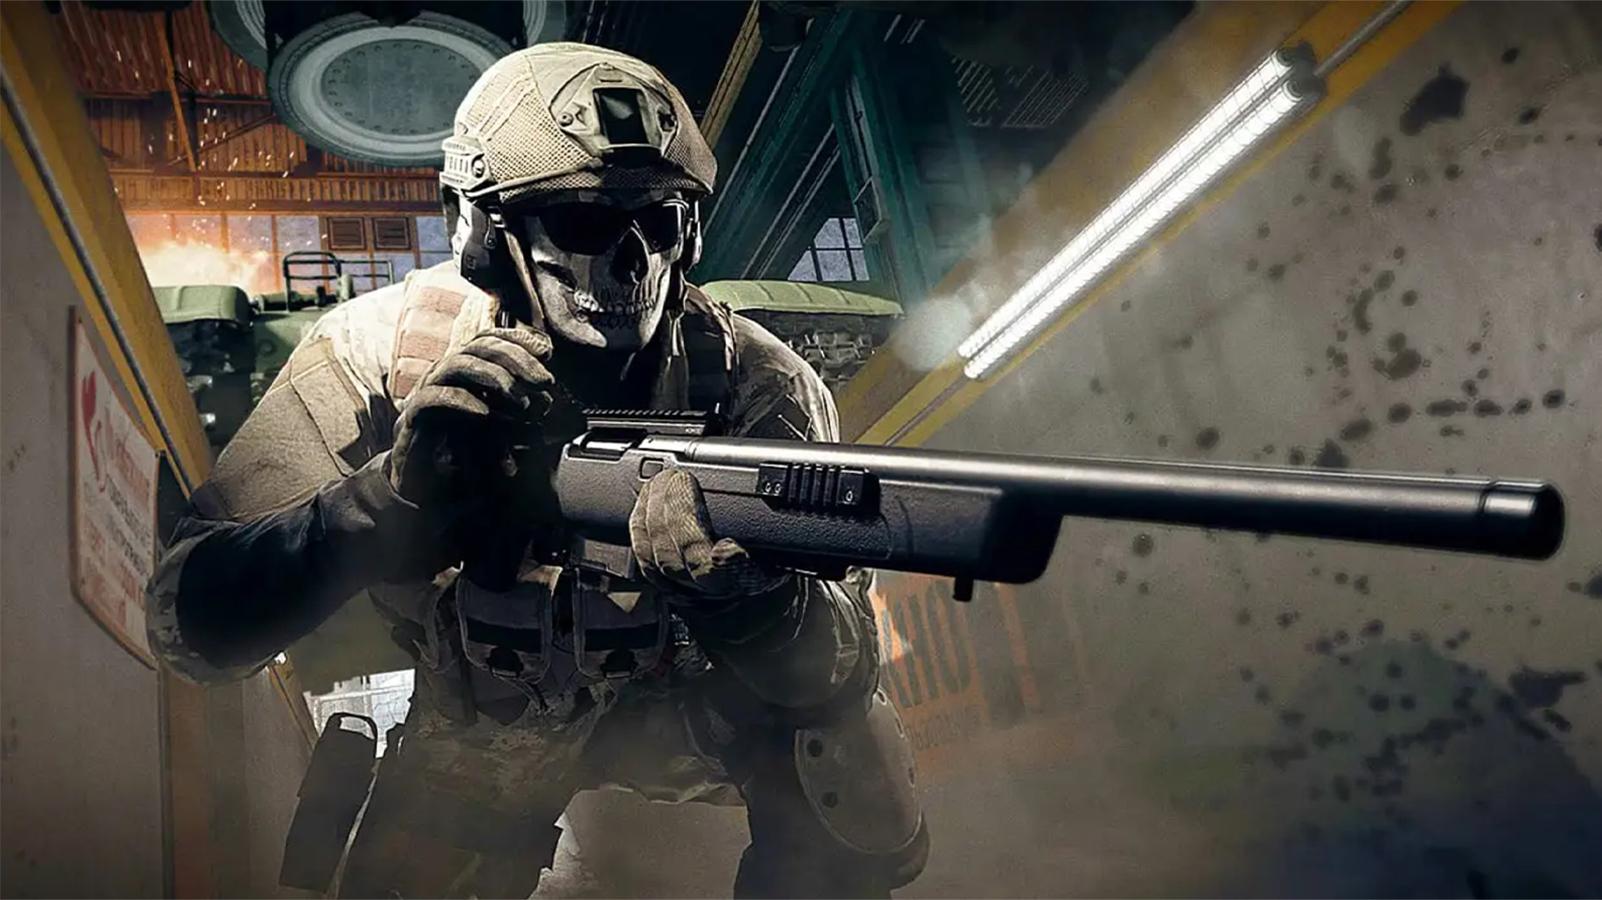 All Modern Warfare 3 weapons: Every new gun revealed - Charlie INTEL